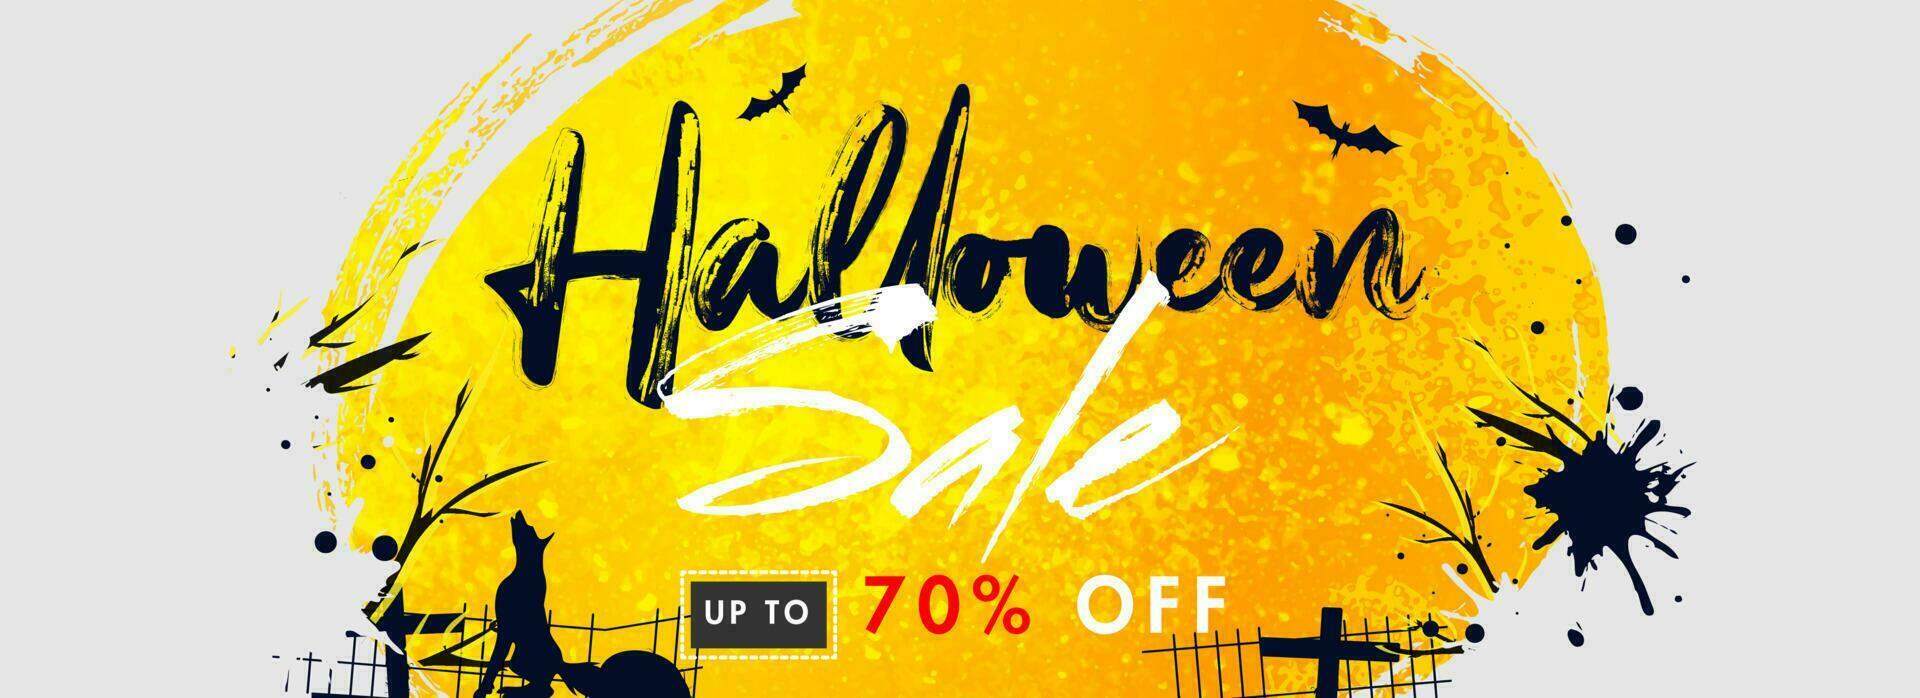 Discount offer for Halloween Sale header or banner design. vector